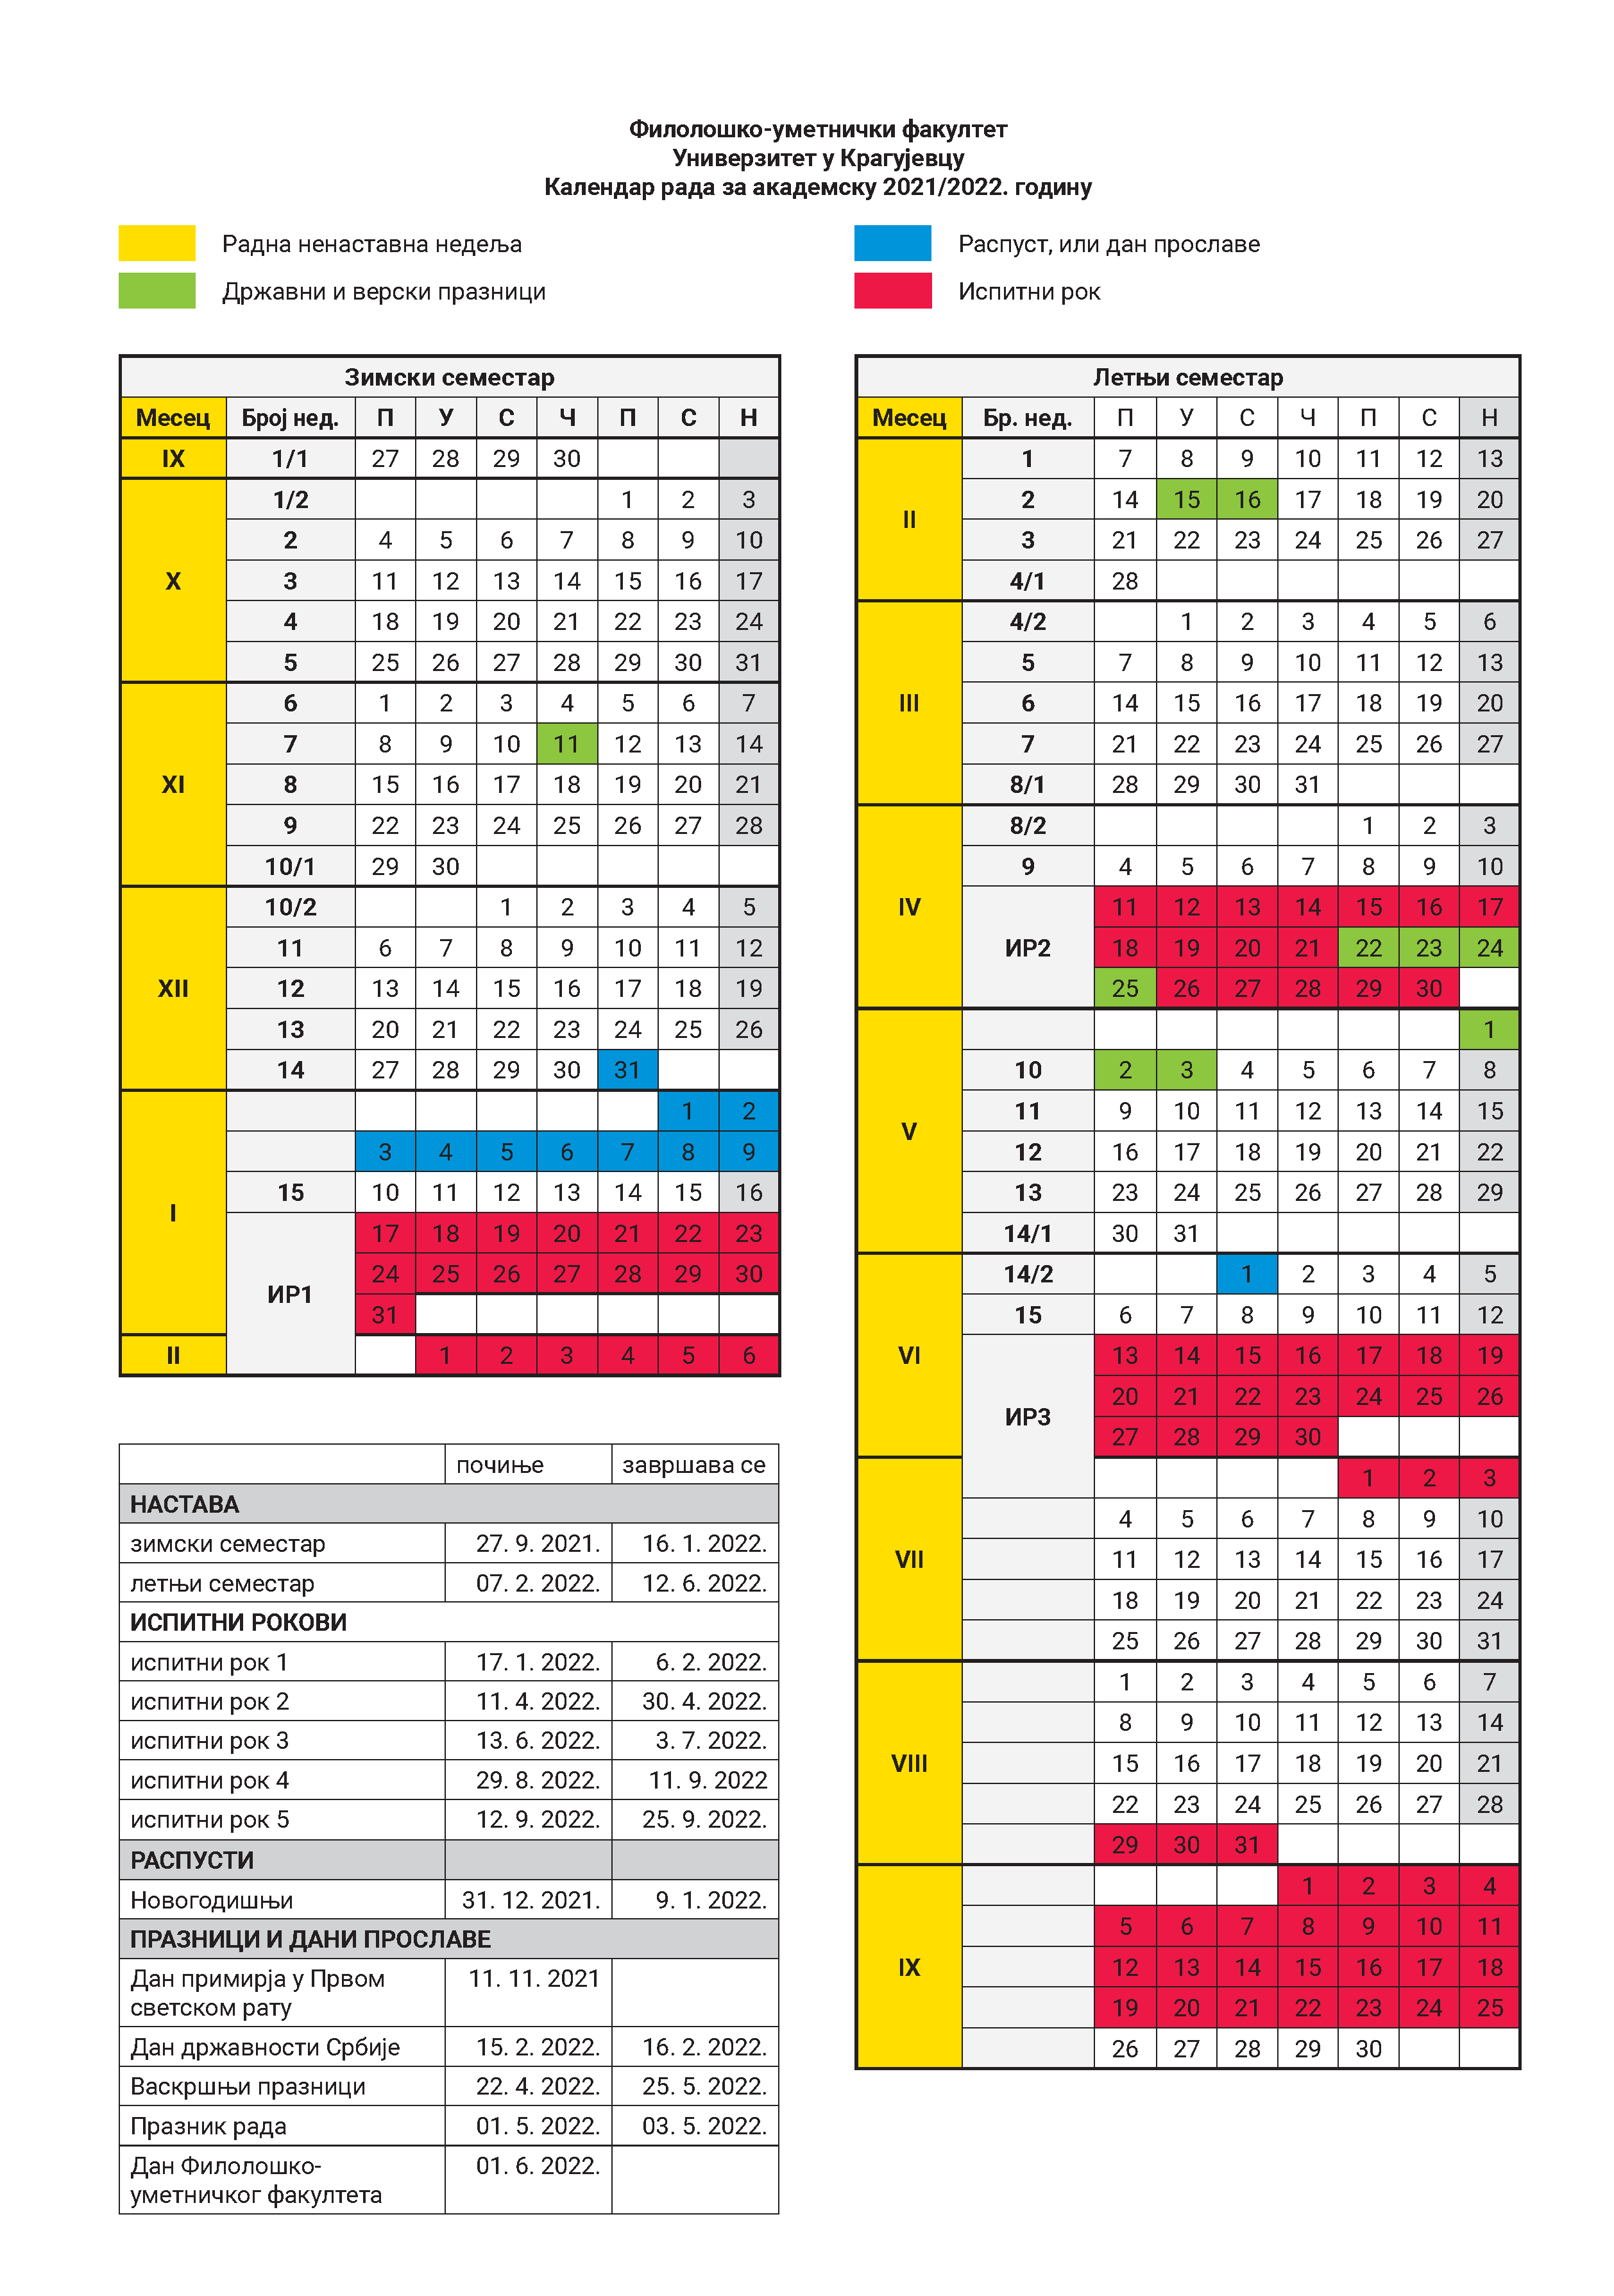 Kalendar rada primenjena 2021/22